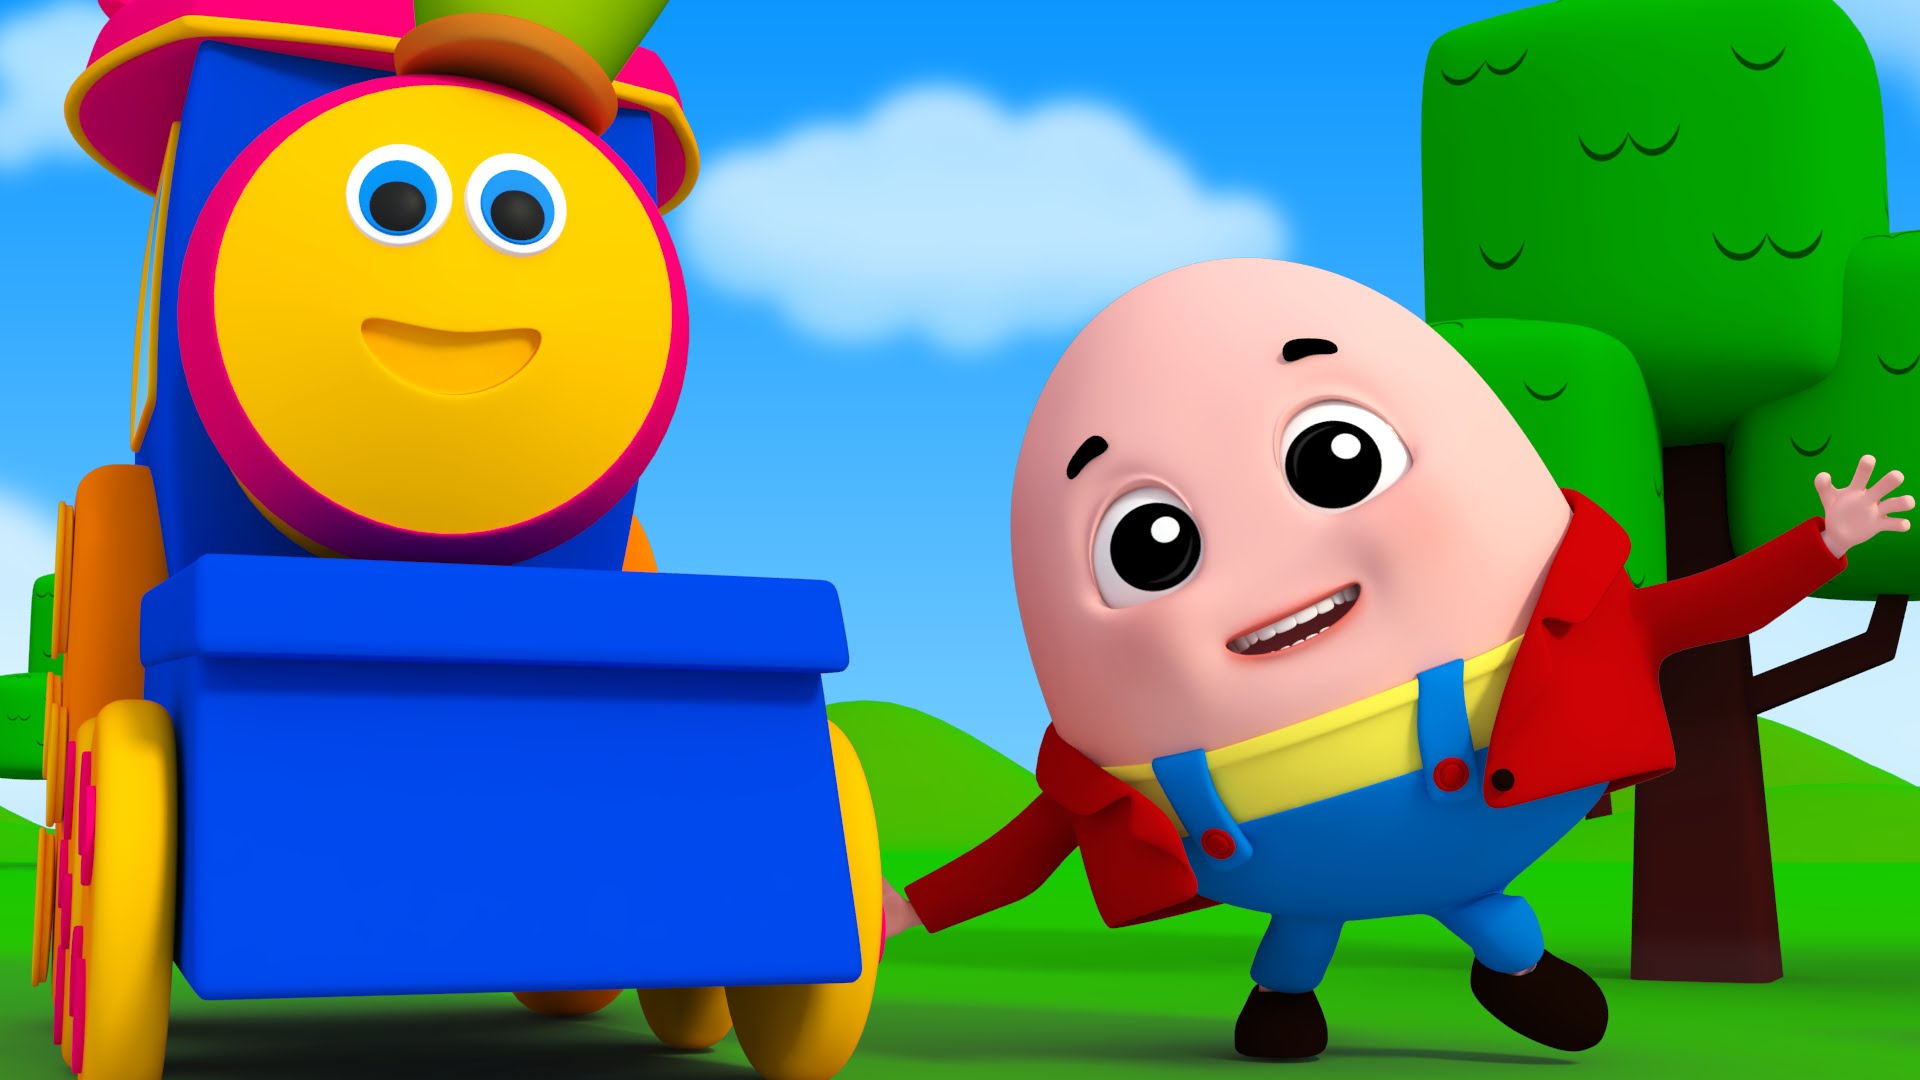 Humpty Dumpty | Bob cartoons | Humpty Dumpty rhymes | Bob the train ...